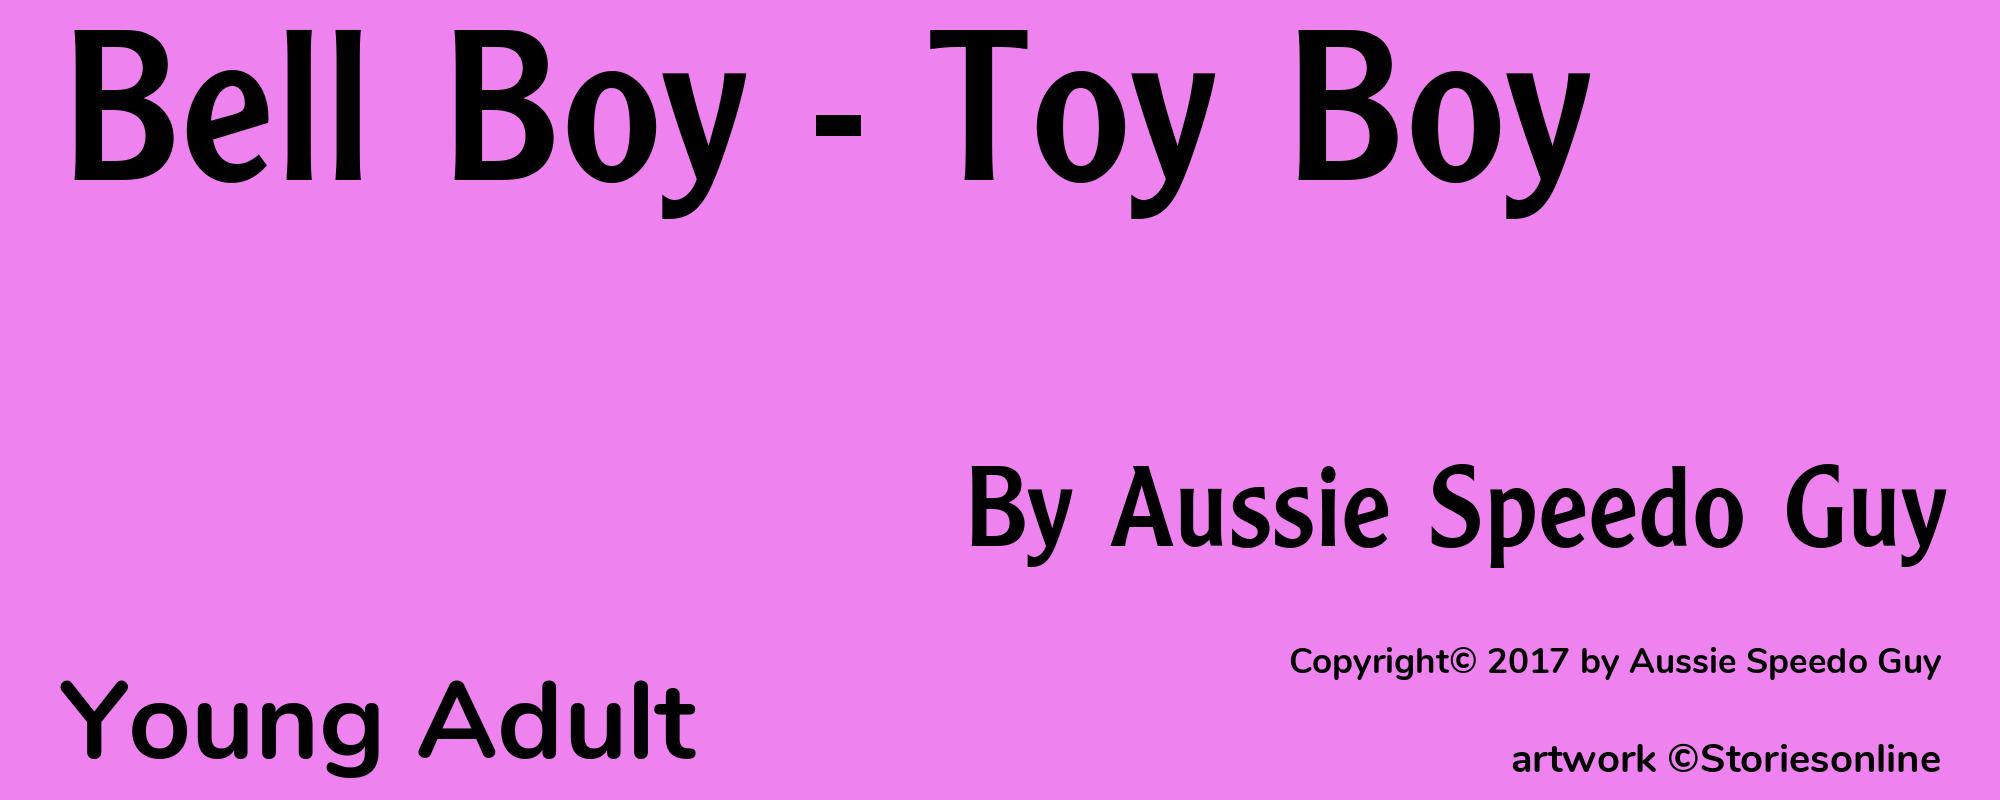 Bell Boy - Toy Boy - Cover